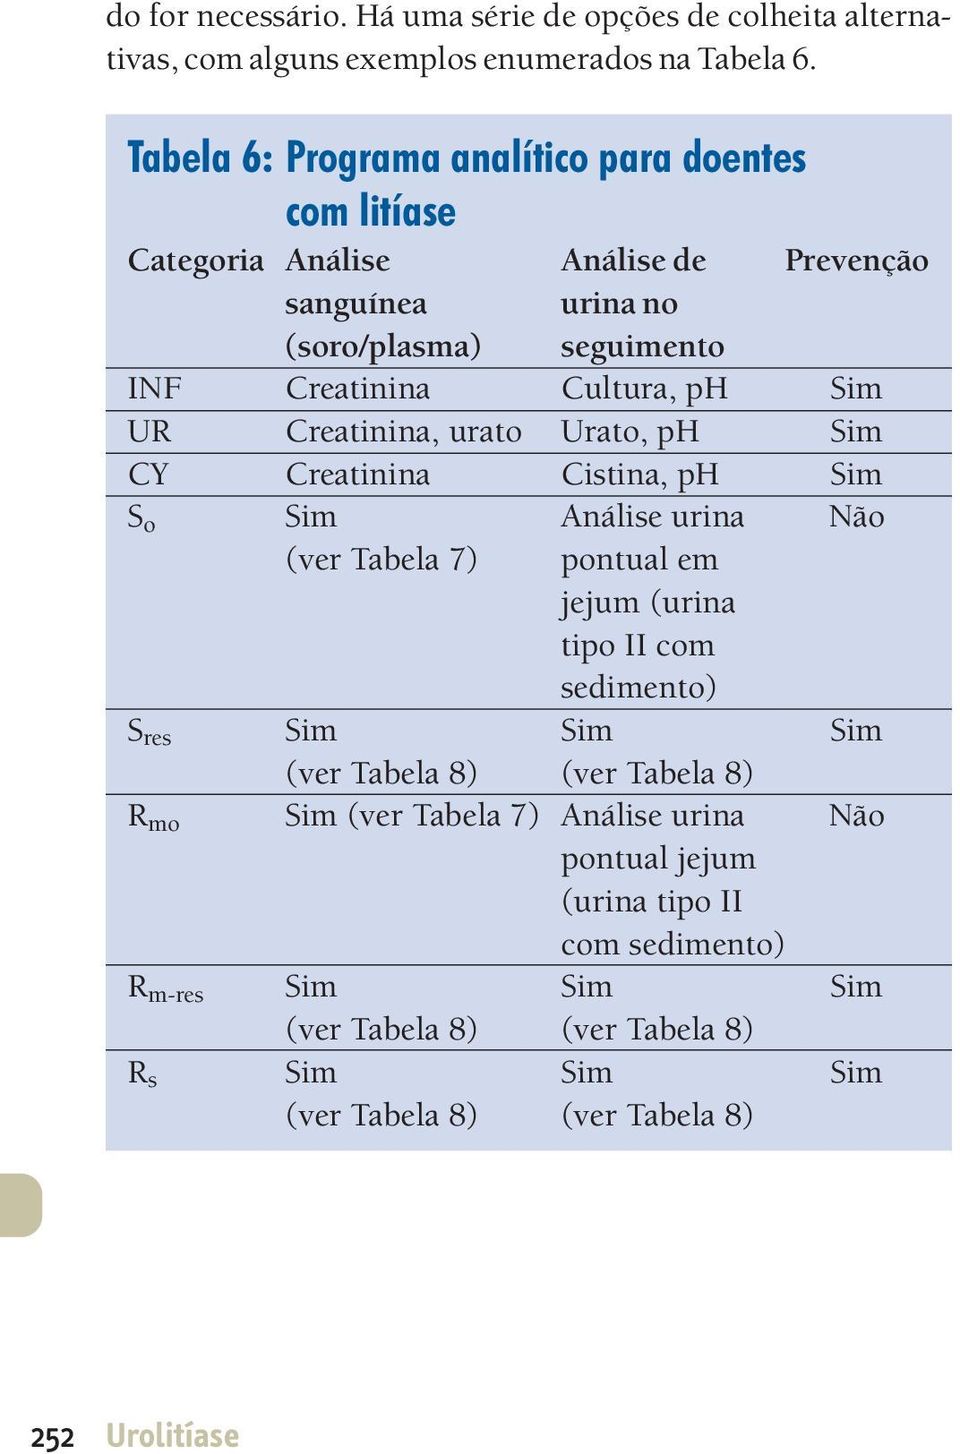 Sim UR Creatinina, urato Urato, ph Sim CY Creatinina Cistina, ph Sim S S R R R o res mo m-res s Sim (ver Tabela 7) Análise urina pontual em jejum (urina tipo II com